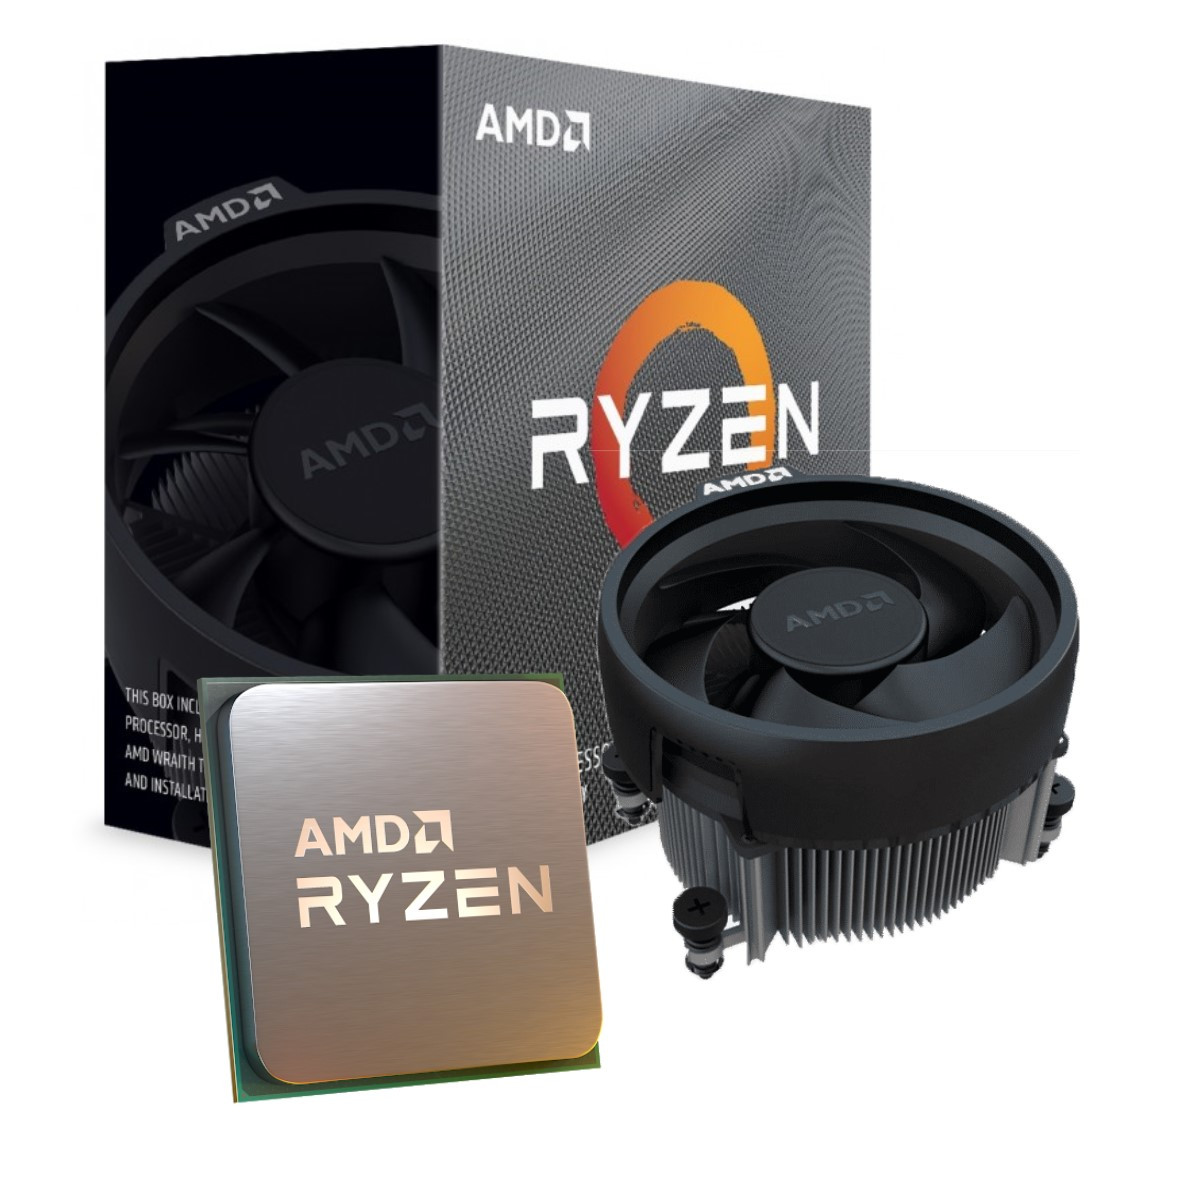 Imagen PC Gamer Ryzen 5 3600XT 1660 Super / 8 Ram, SSD 480, Board ASUS PRIME B450, Chasis Invader, Fuente Real 2